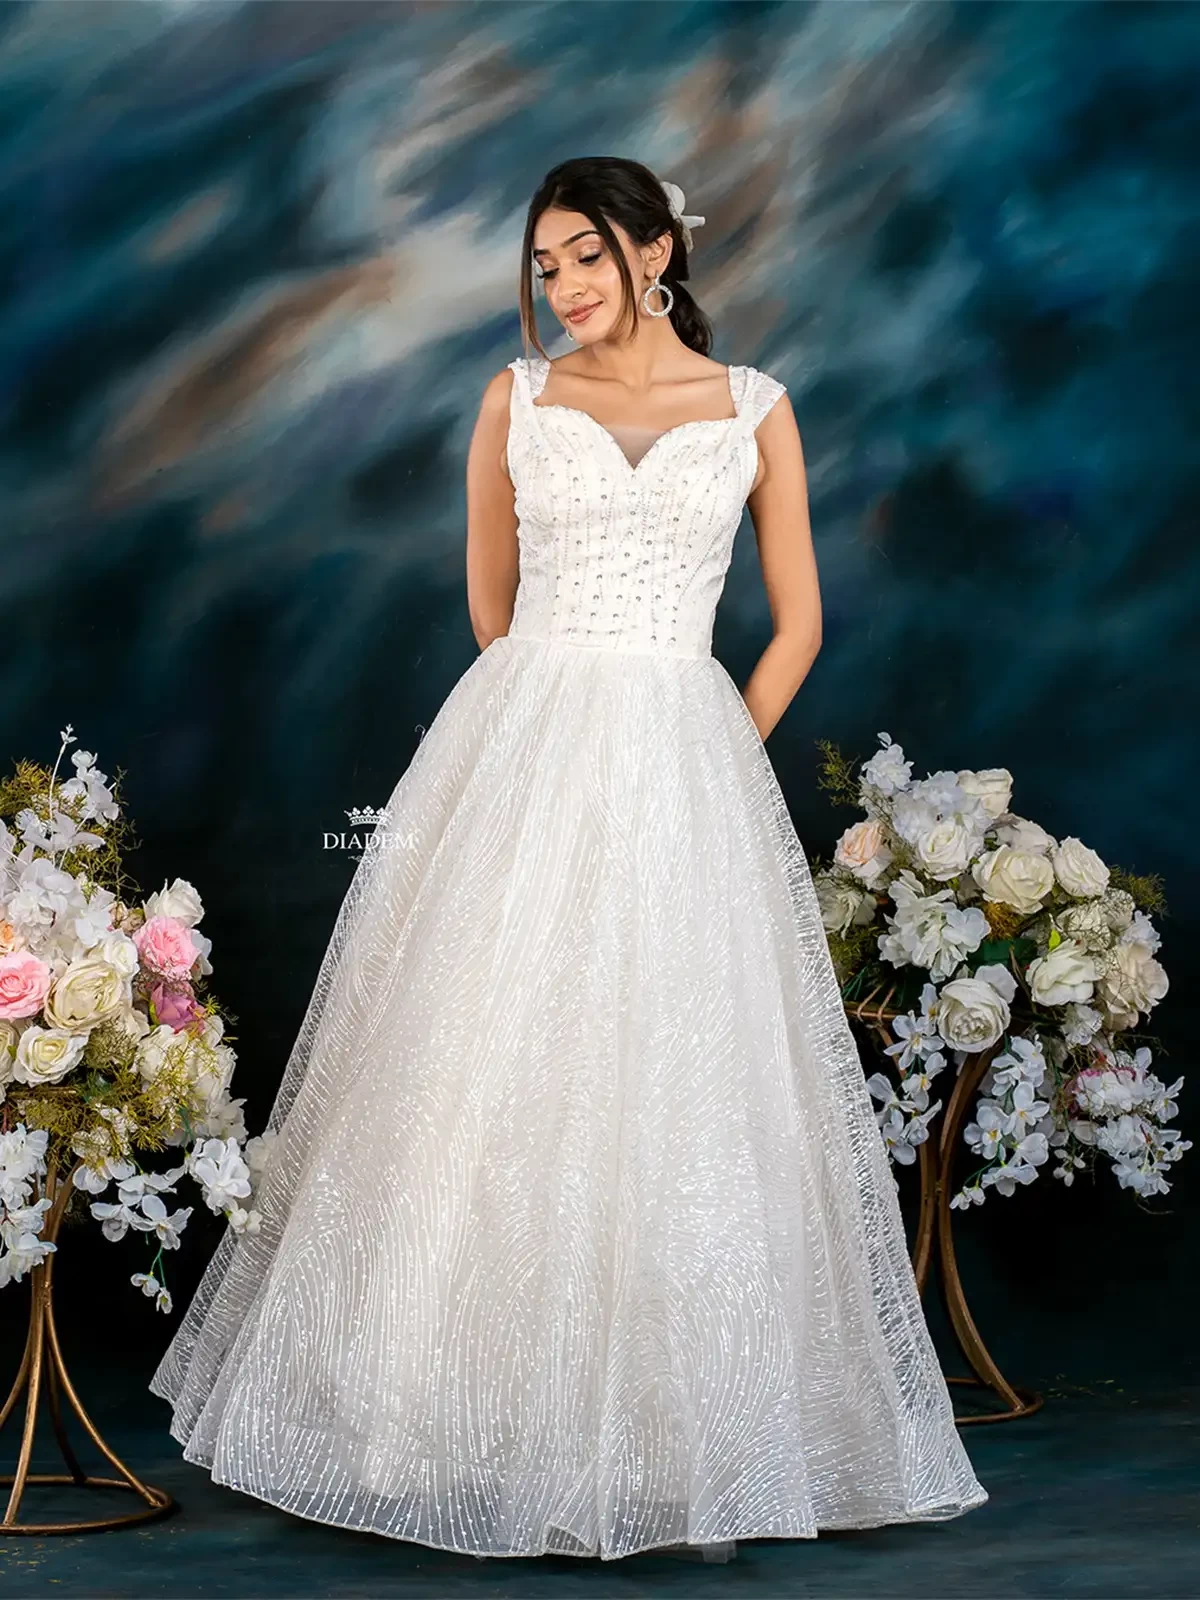 Long Sleeve Ruffle Skirt White Wedding Dress – daisystyledress